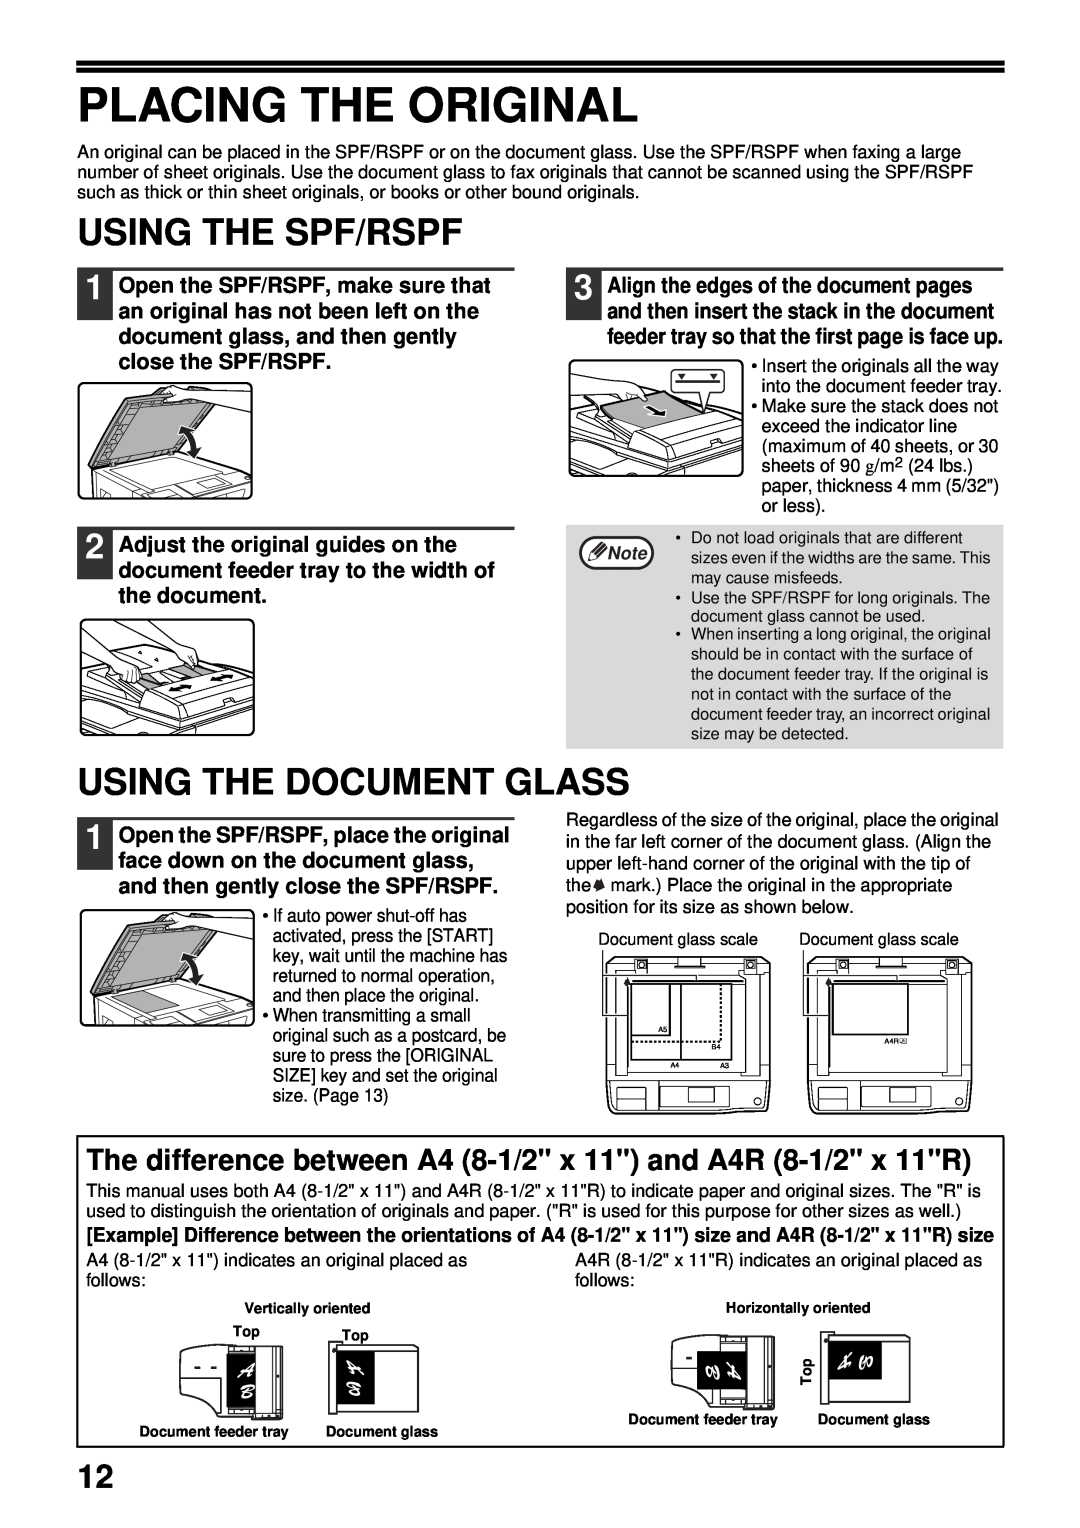 Sharp MX-FX13 appendix Placing The Original, Using The Spf/Rspf, Using The Document Glass 